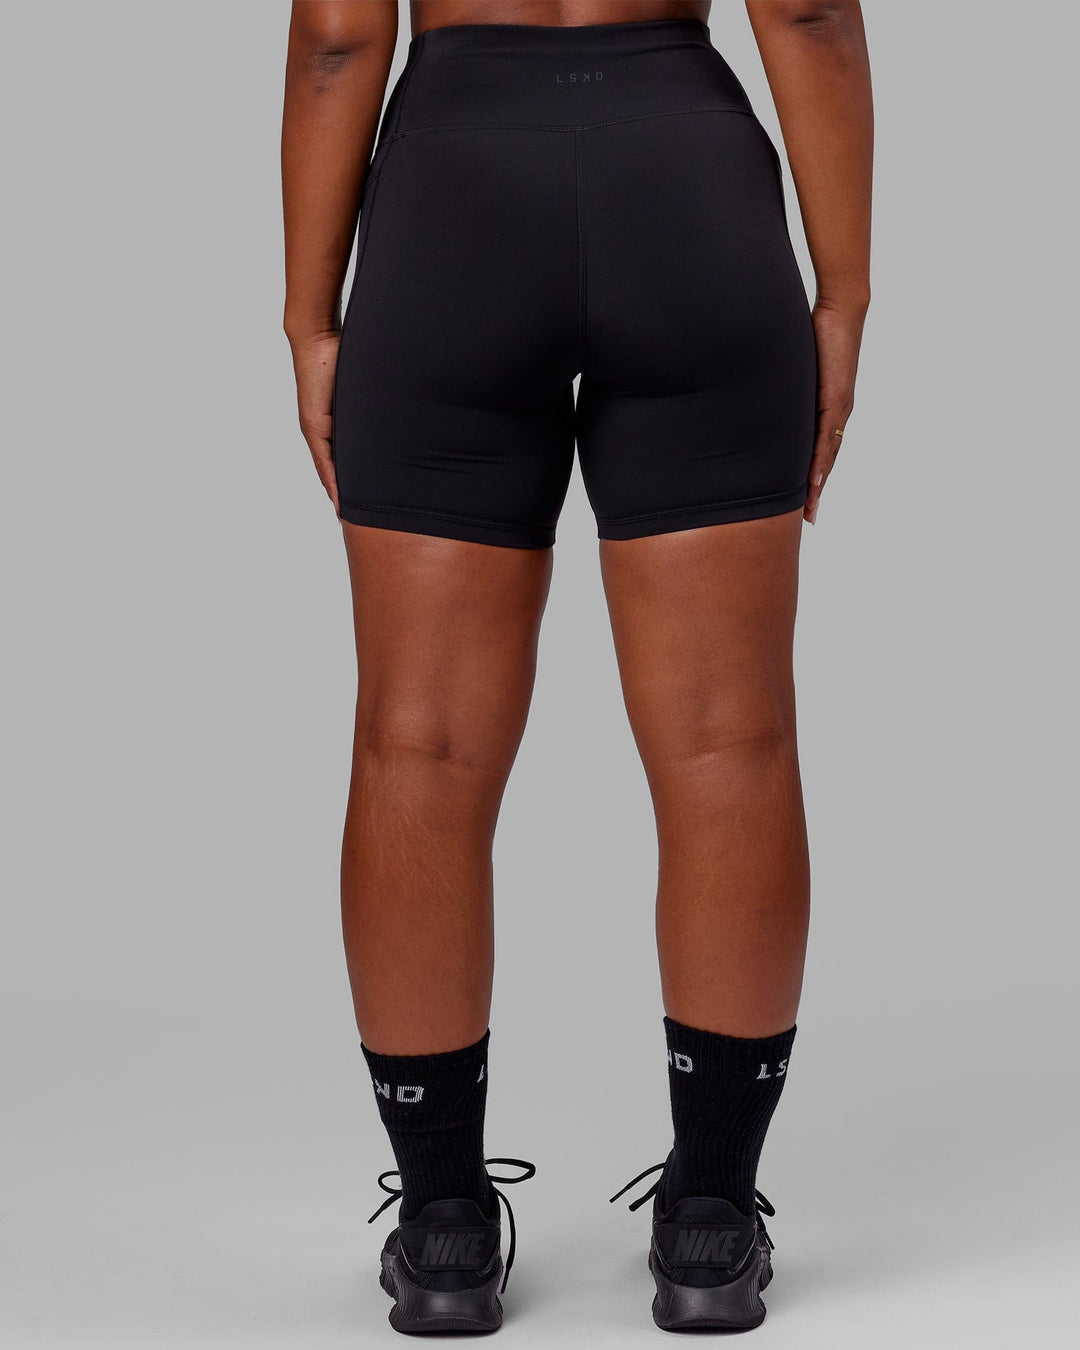 Rep Mid-Length Shorts - Black-Black